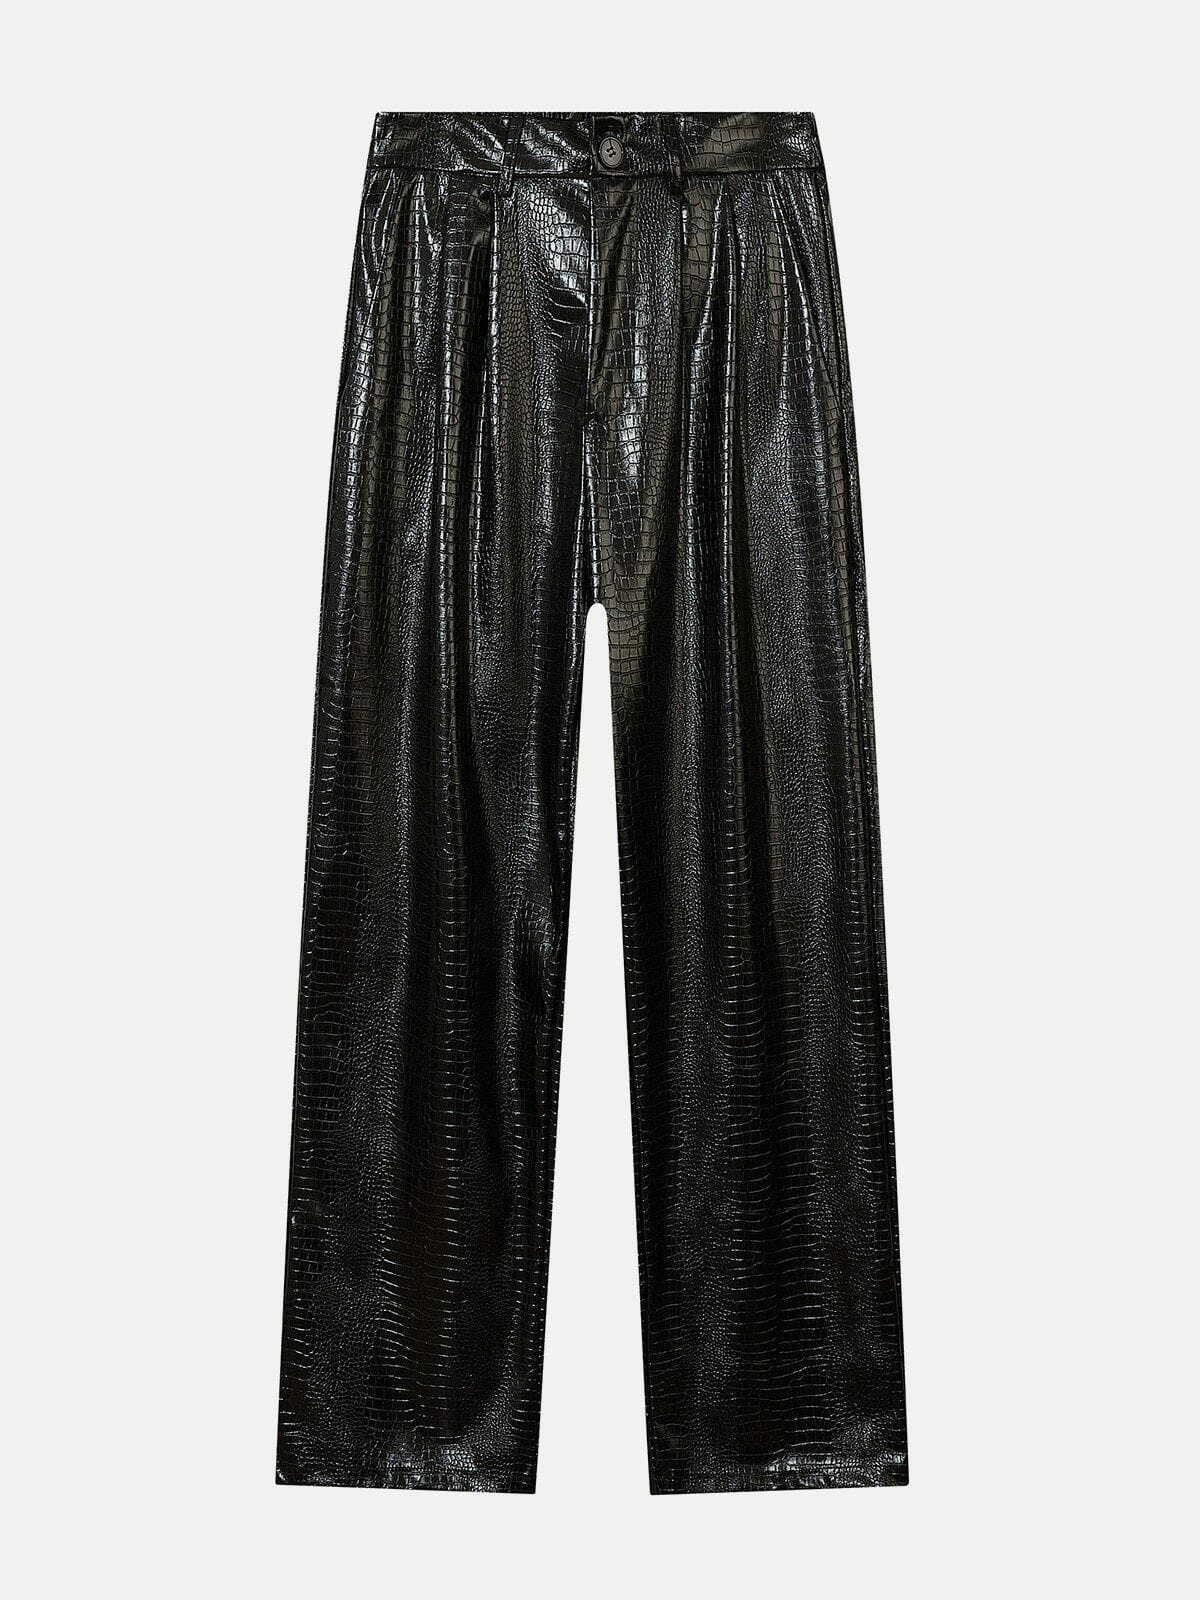 sleek leather pants edgy & stylish streetwear 7981